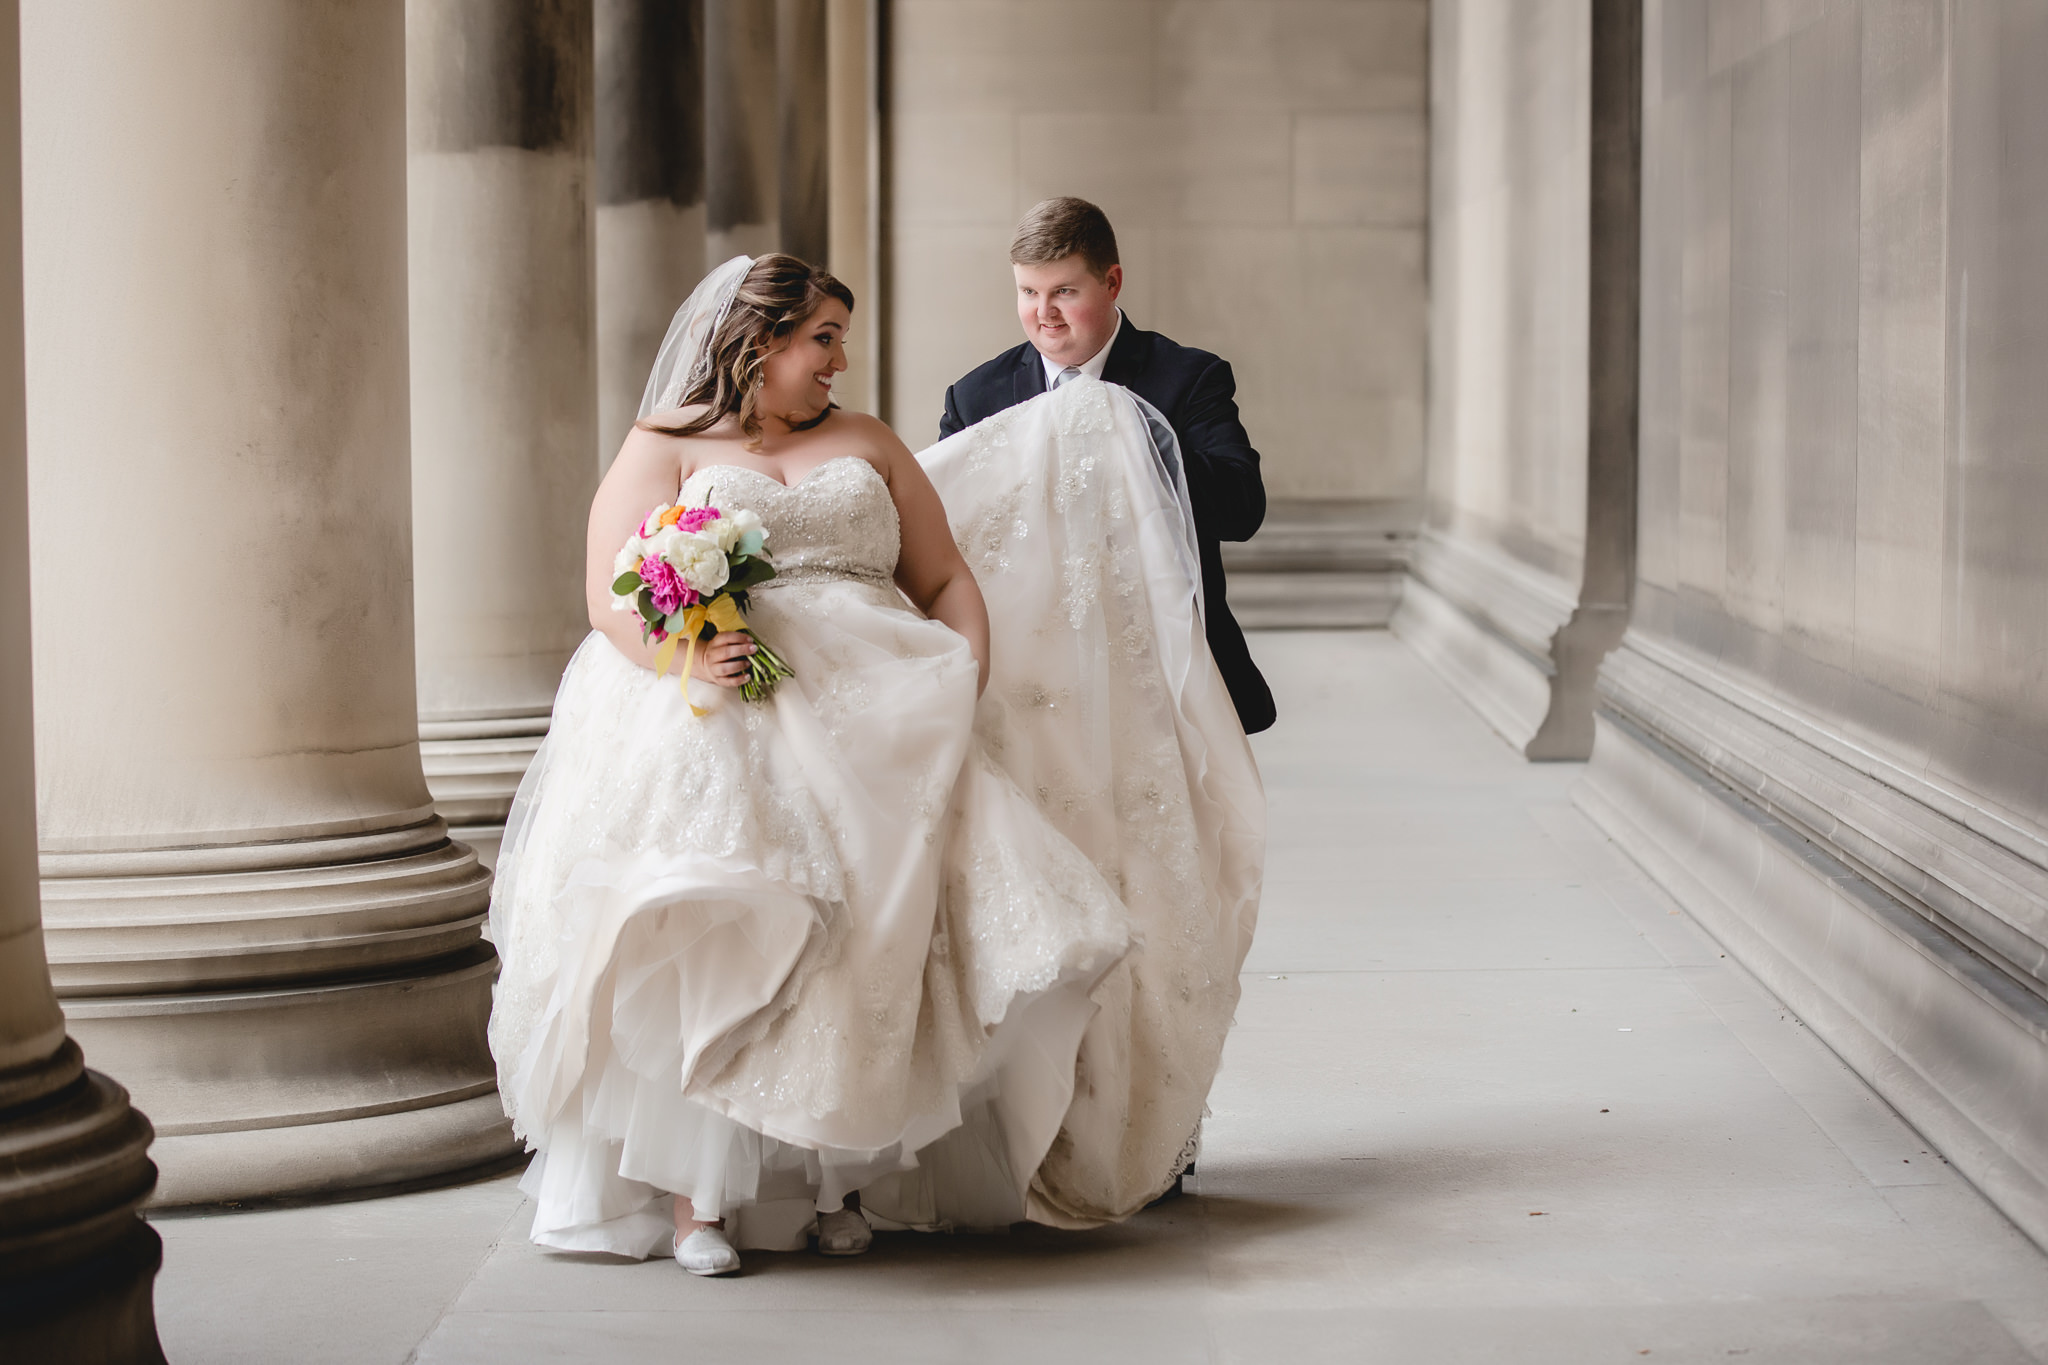 Groom helps bride walk to their Soldiers & Sailors wedding reception